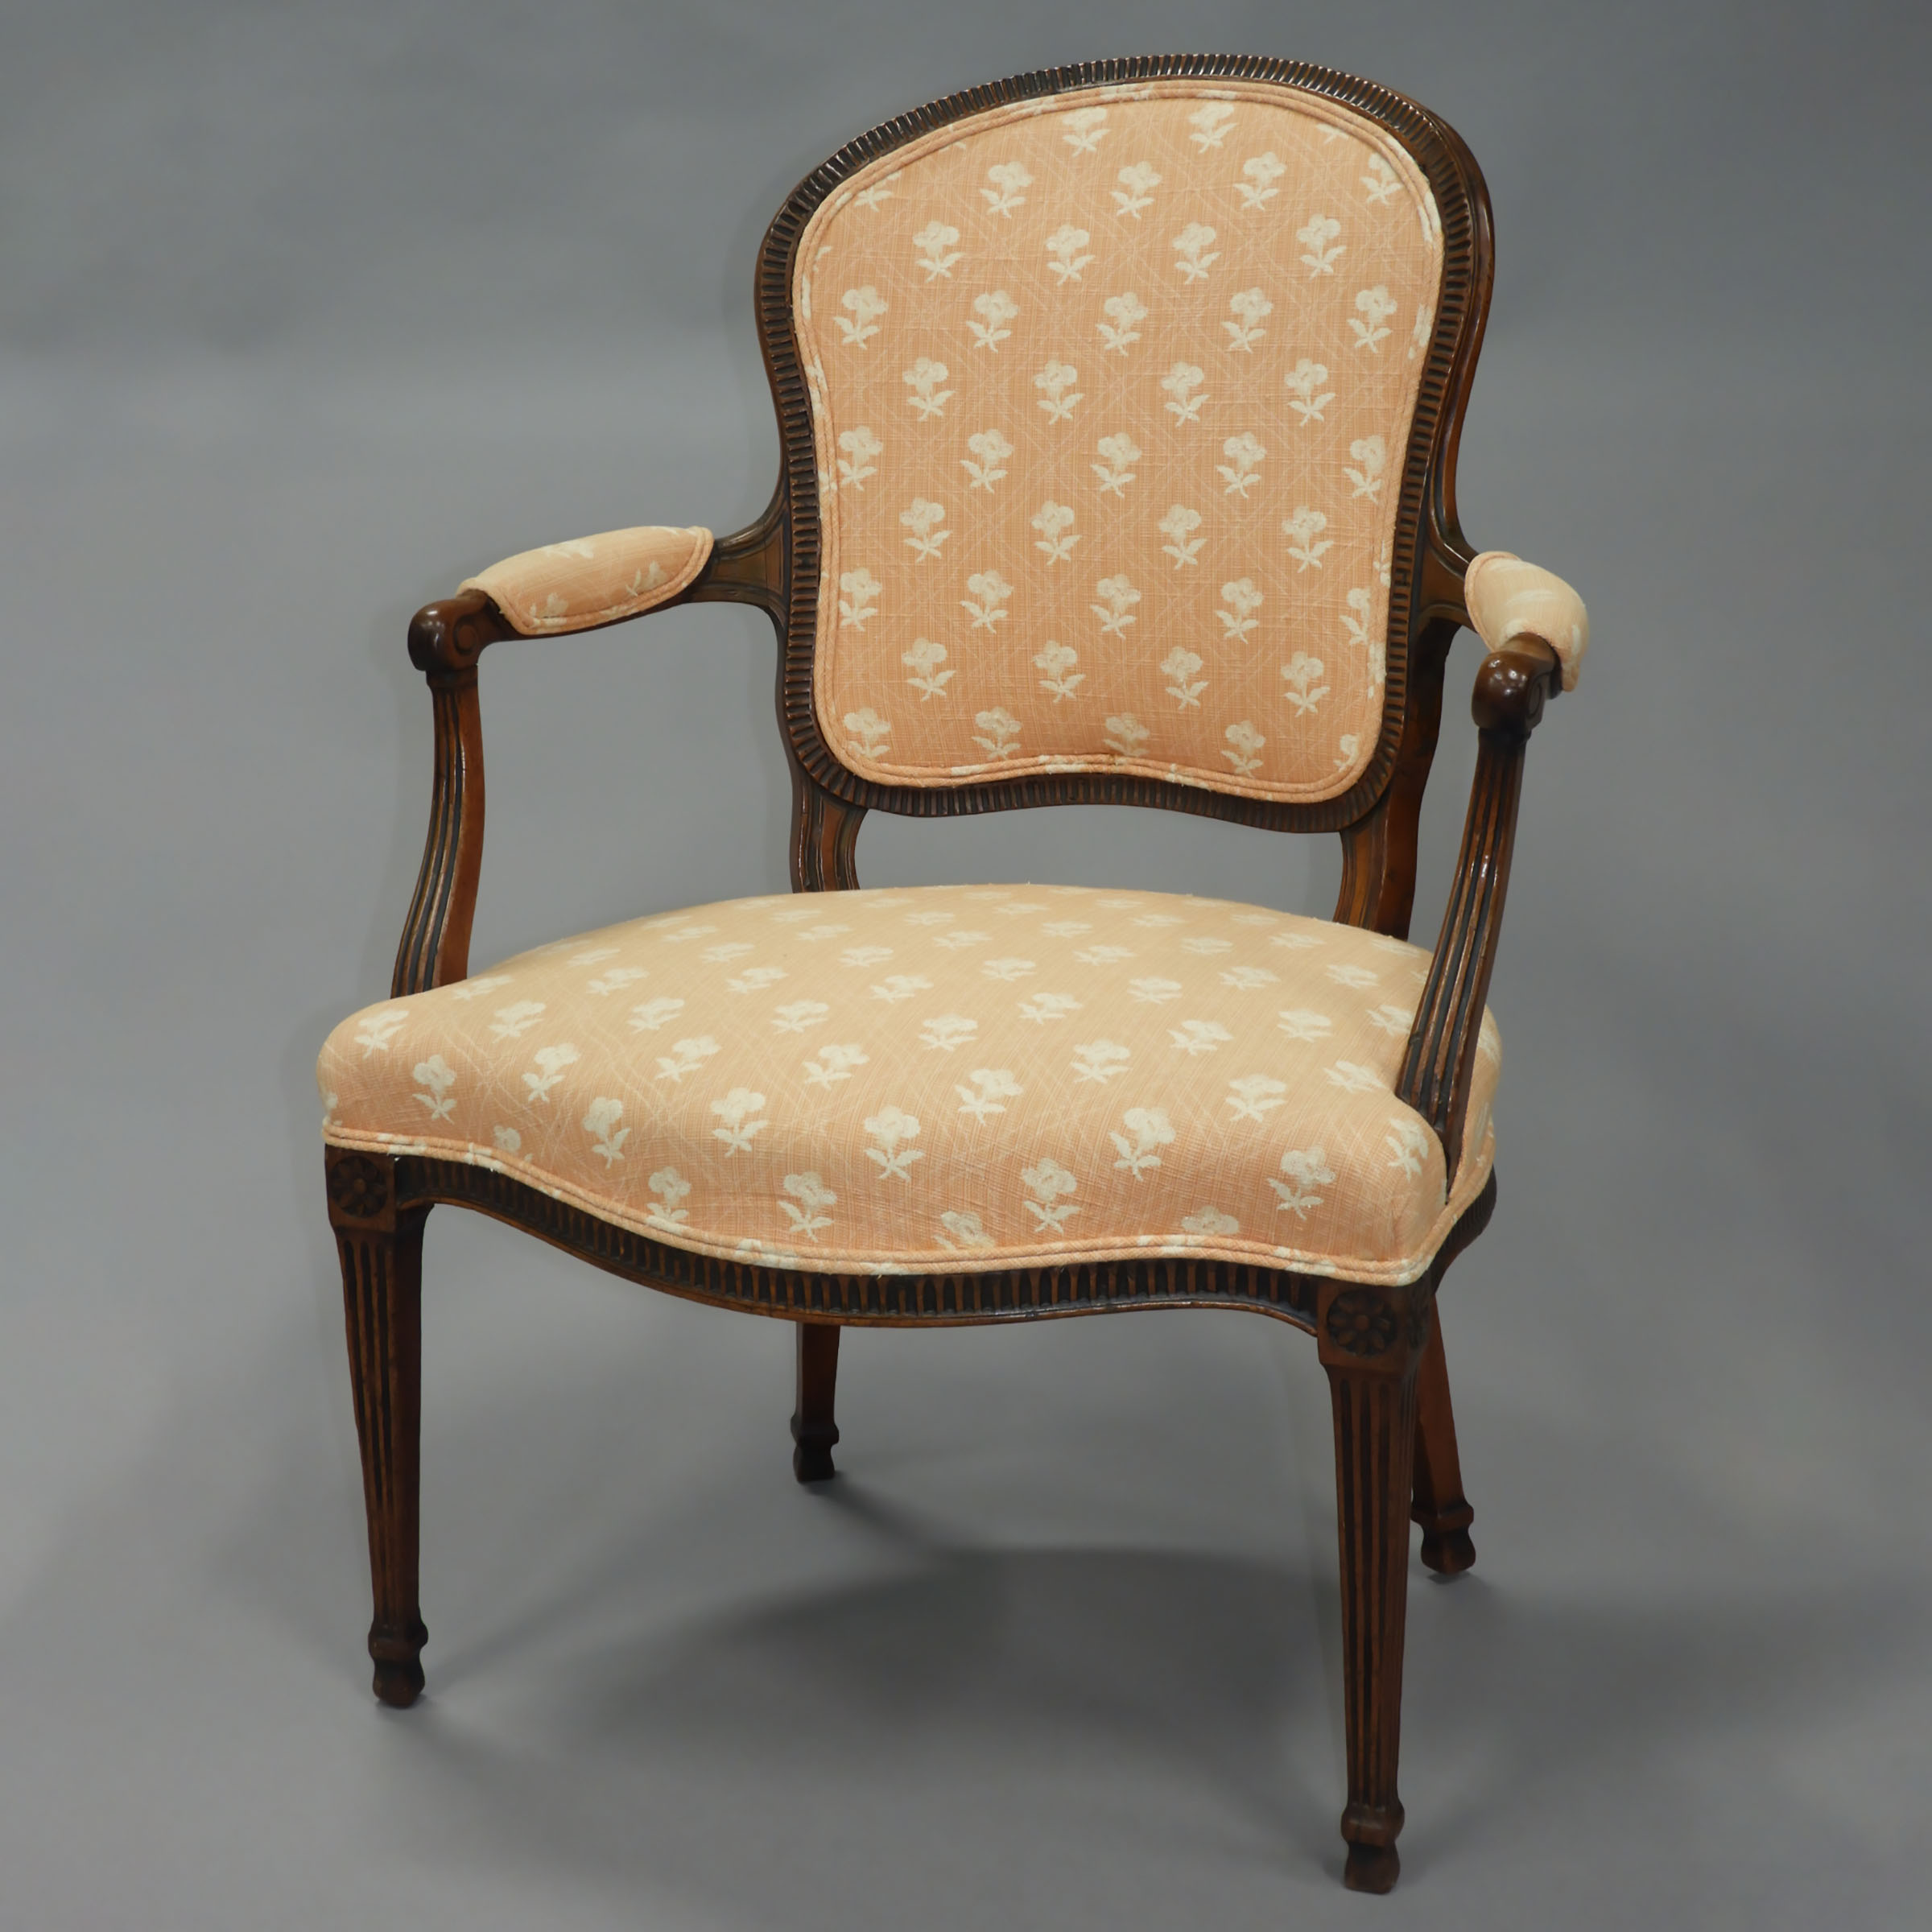 French Walnut Open Armchair, 19th century